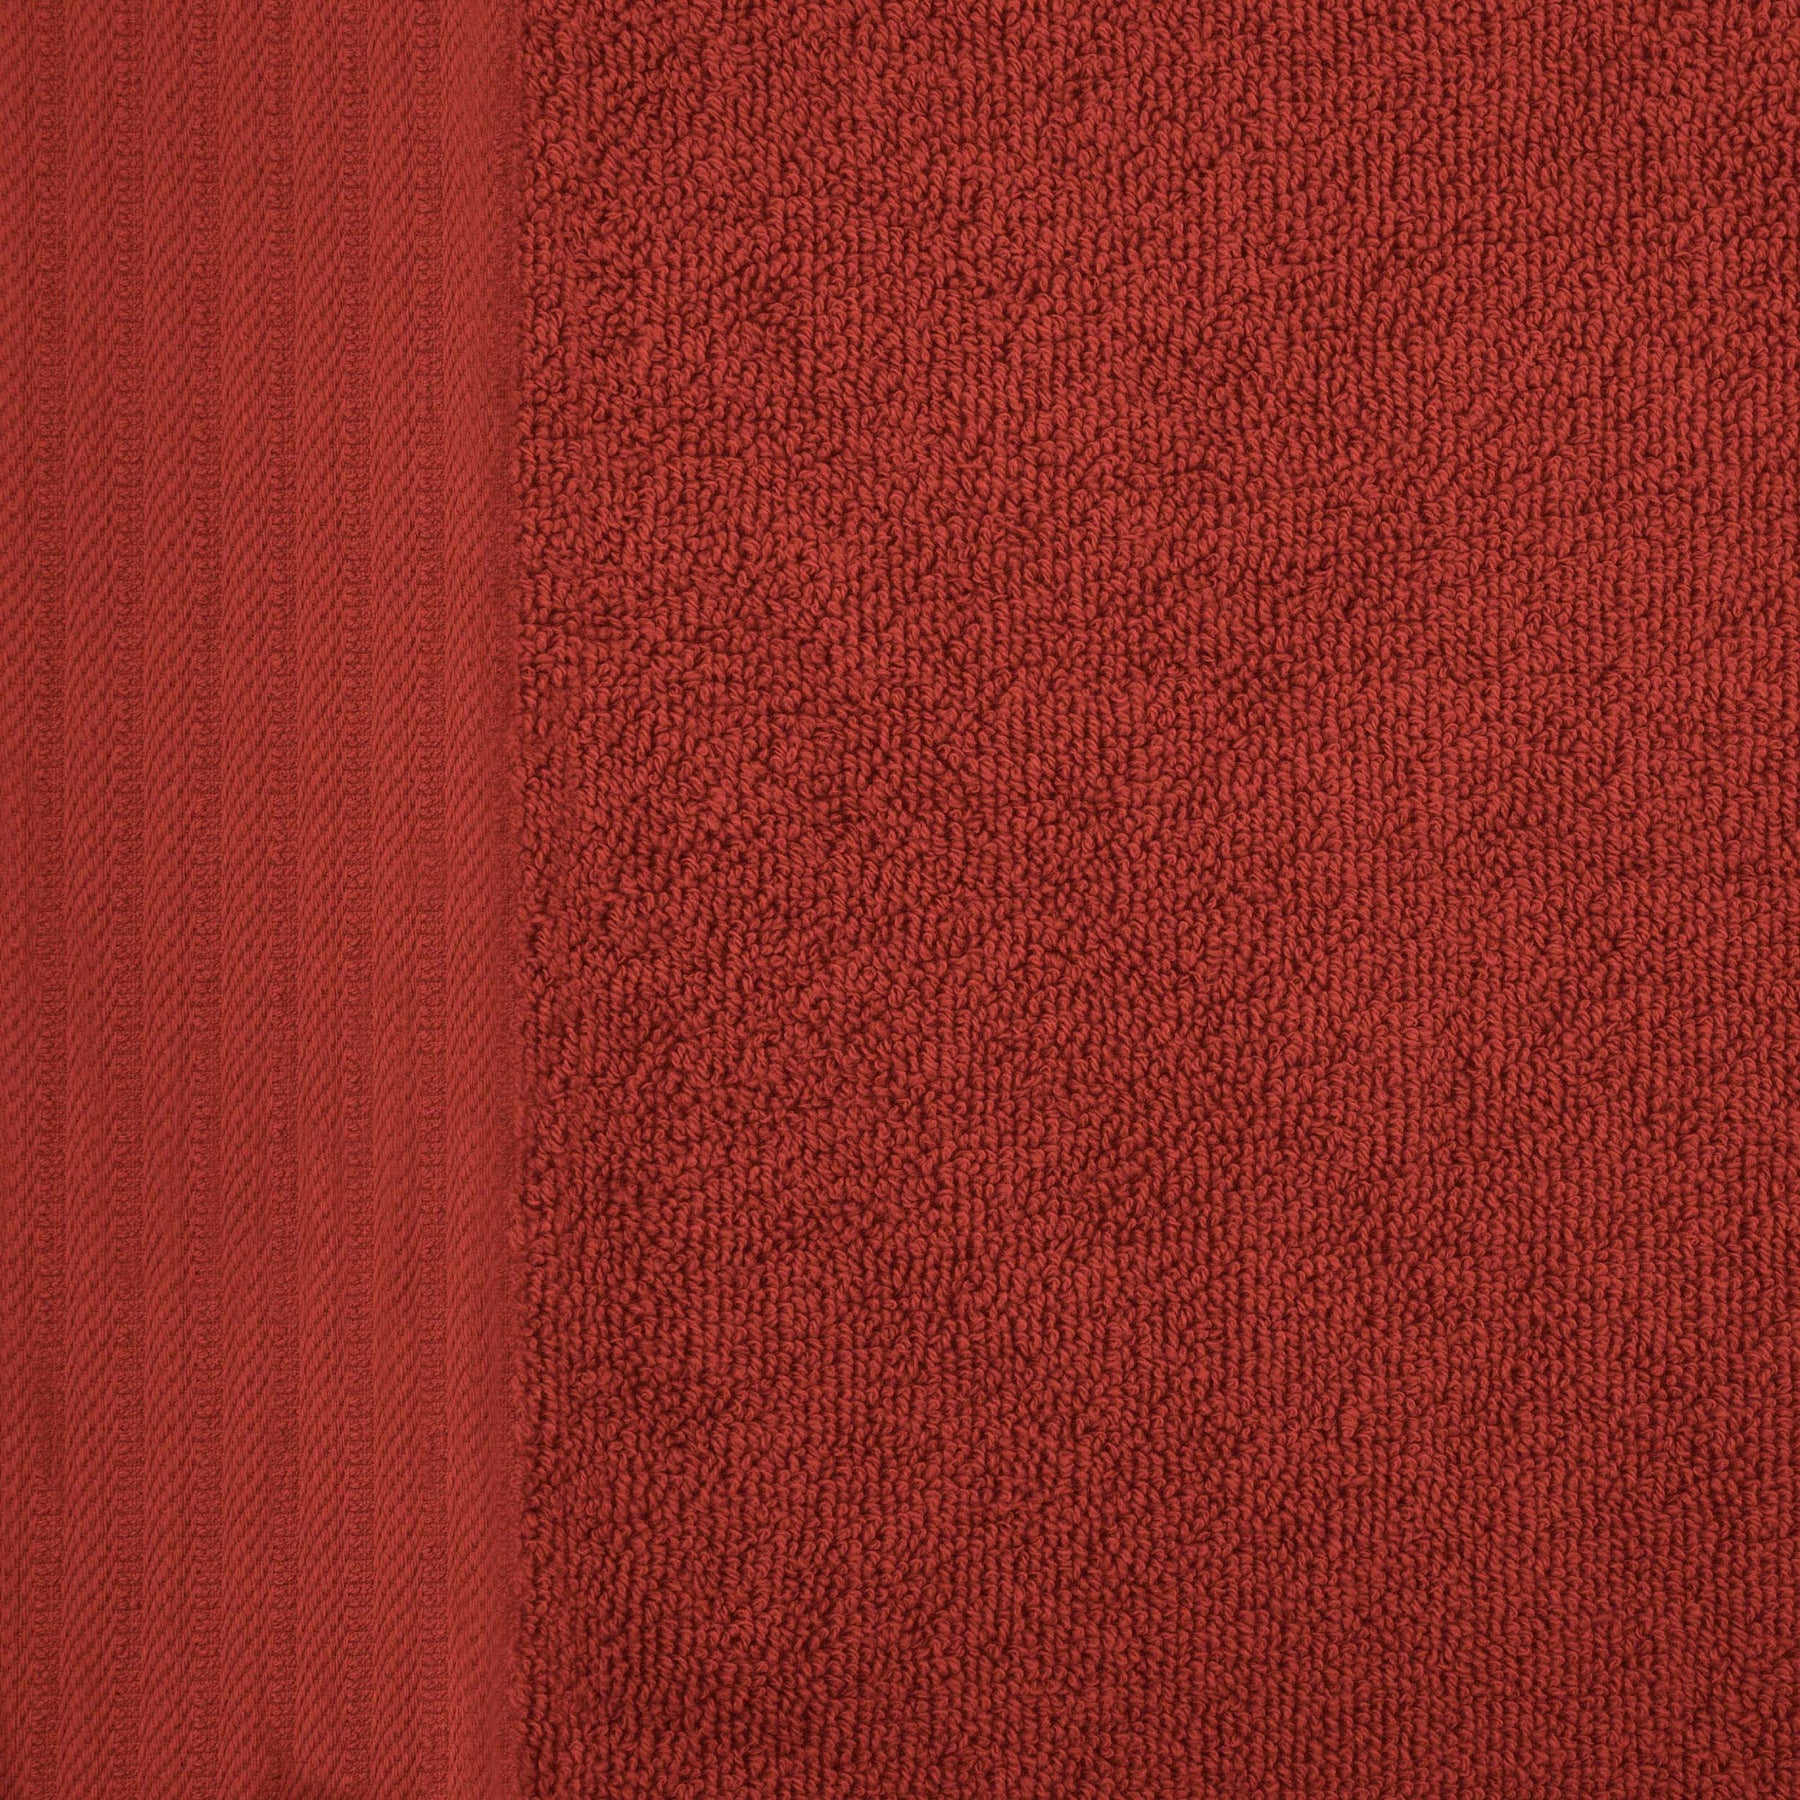 Premium Turkish Cotton Jacquard Herringbone and Solid 8-Piece Towel Set - Maroon